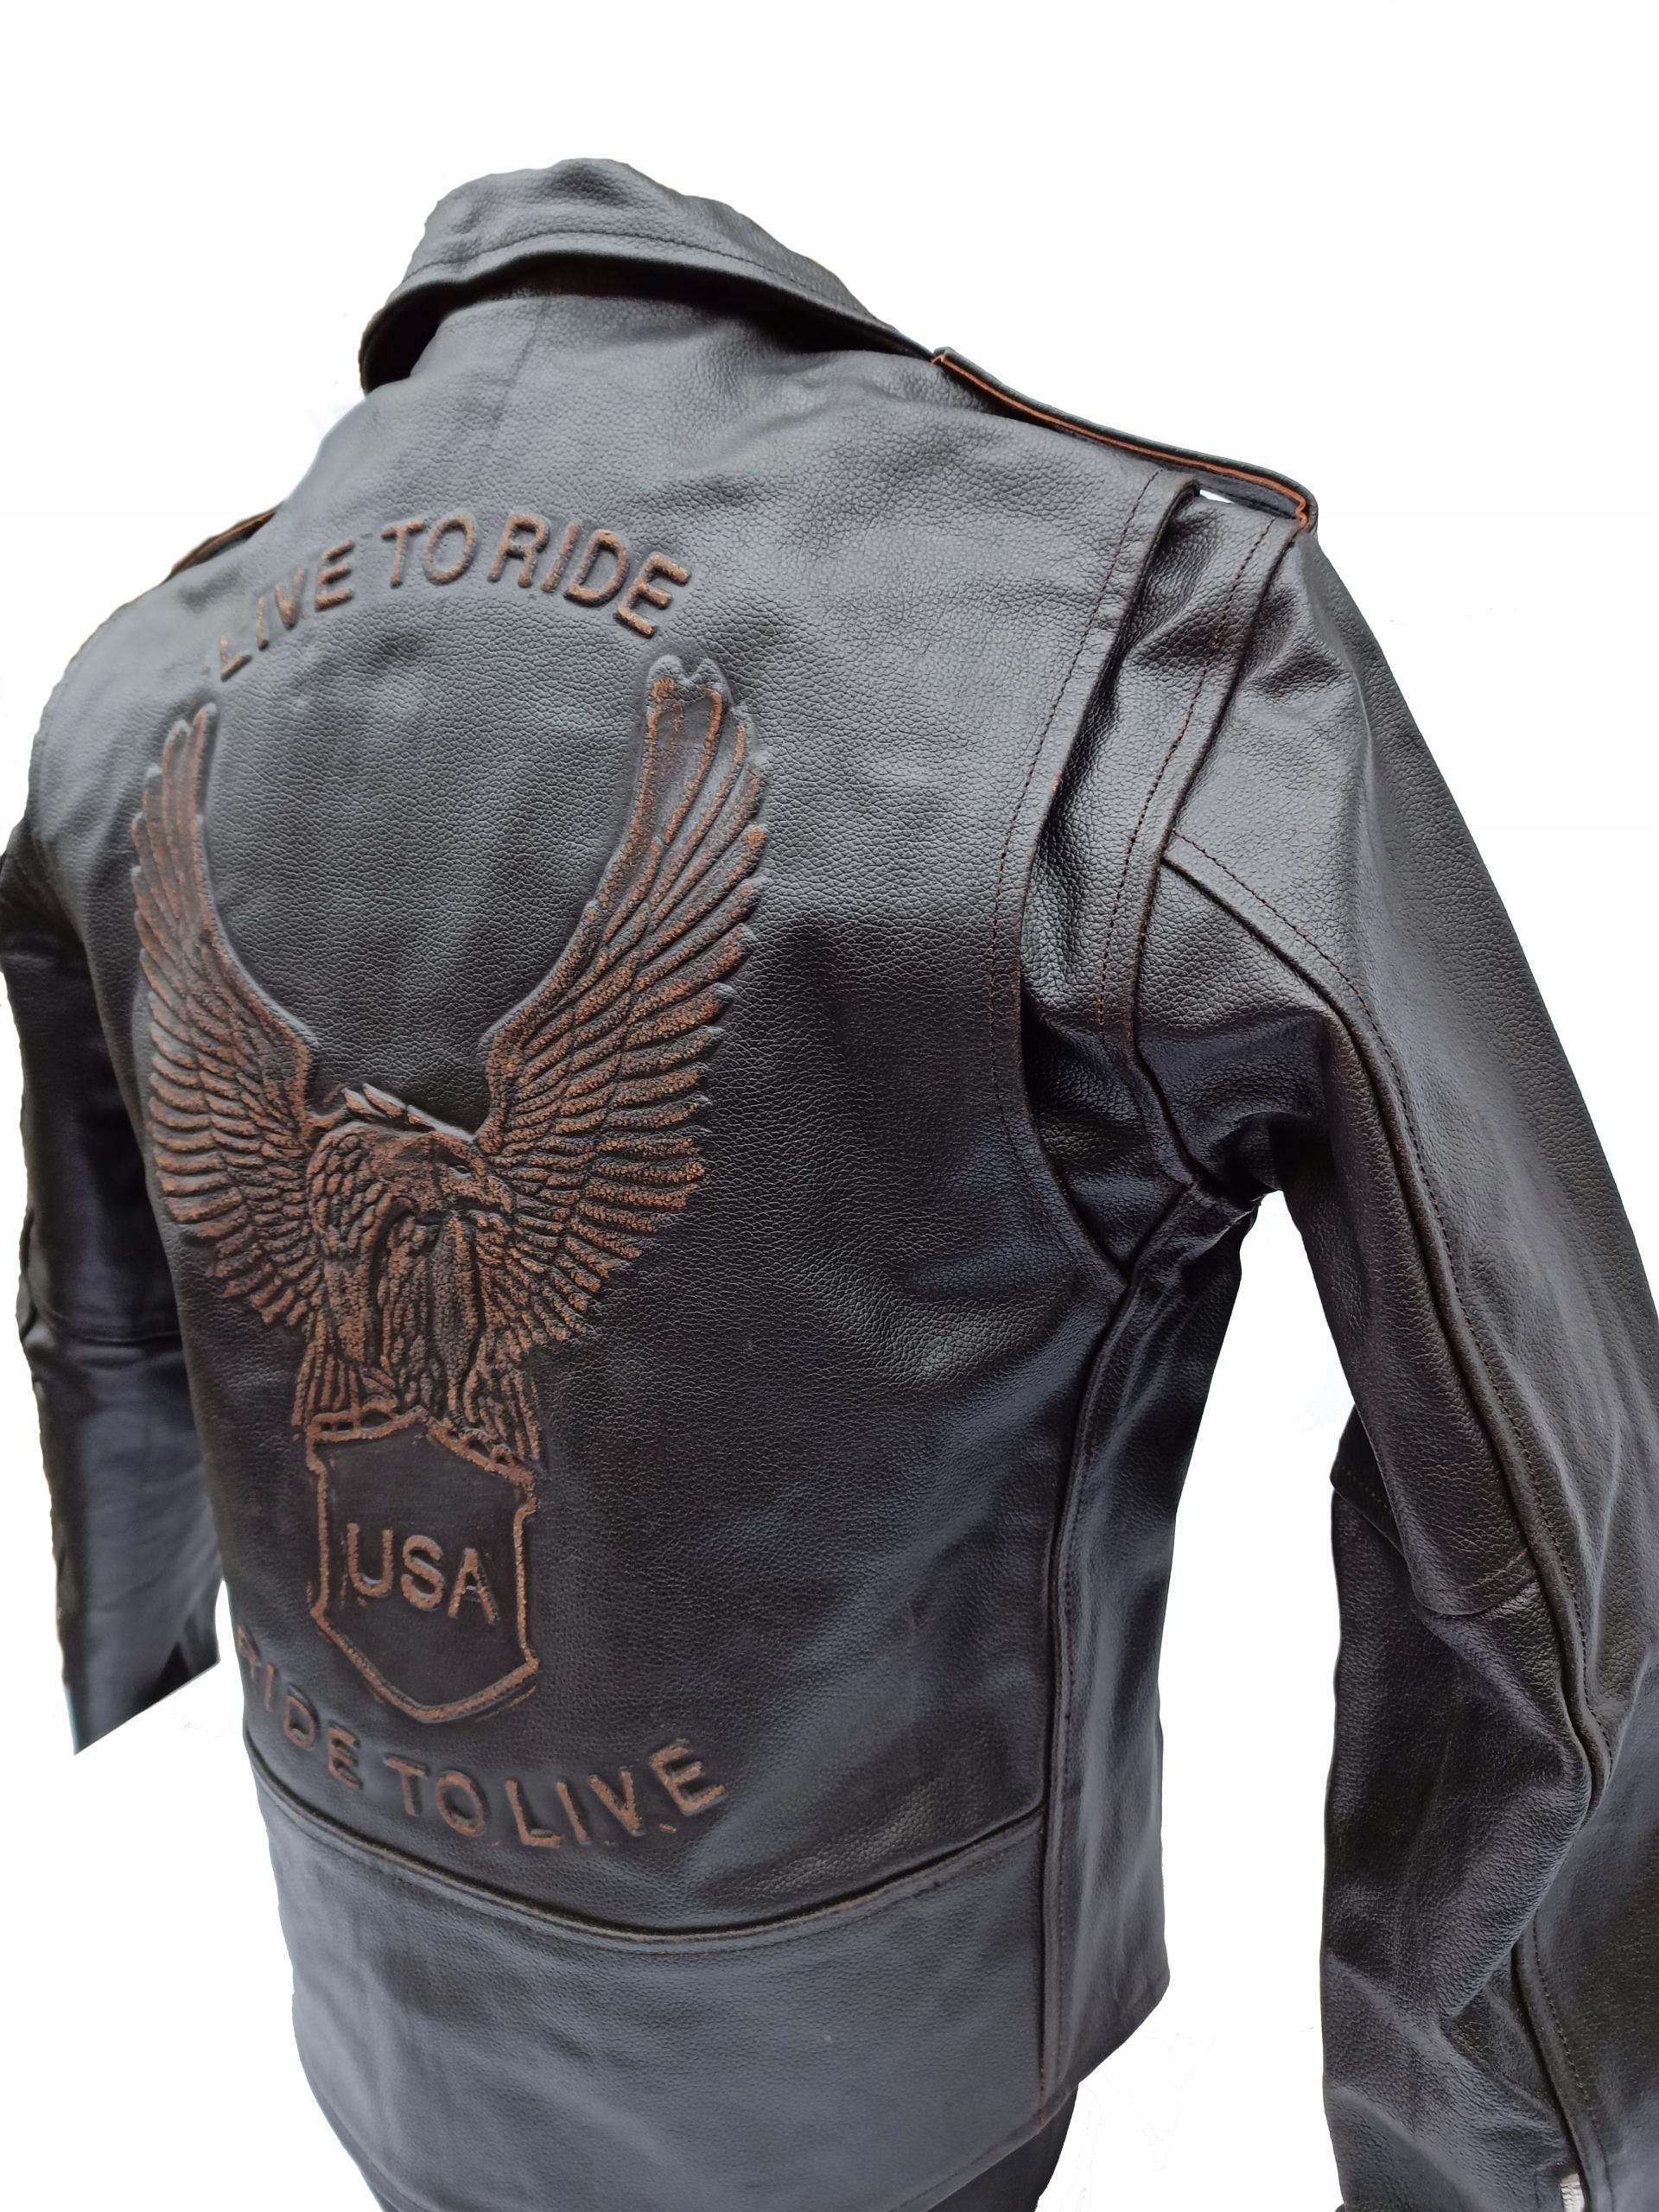 Мотоциклетная куртка с тиснением Eagle New roz. M